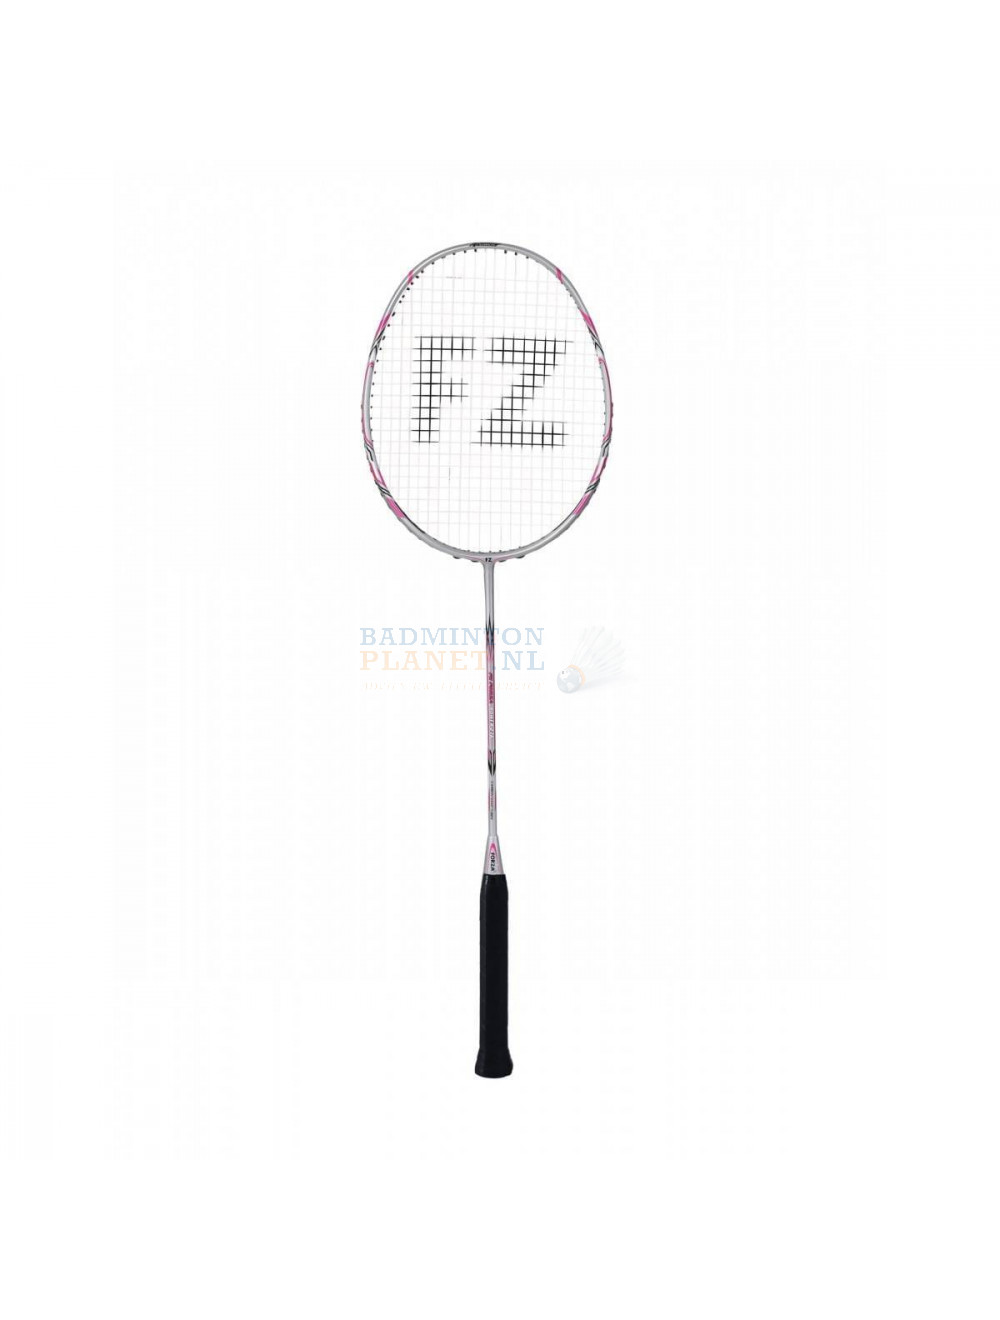 FZ Forza 276 Roze badmintonracket kopen? - Badmintonplanet.nl